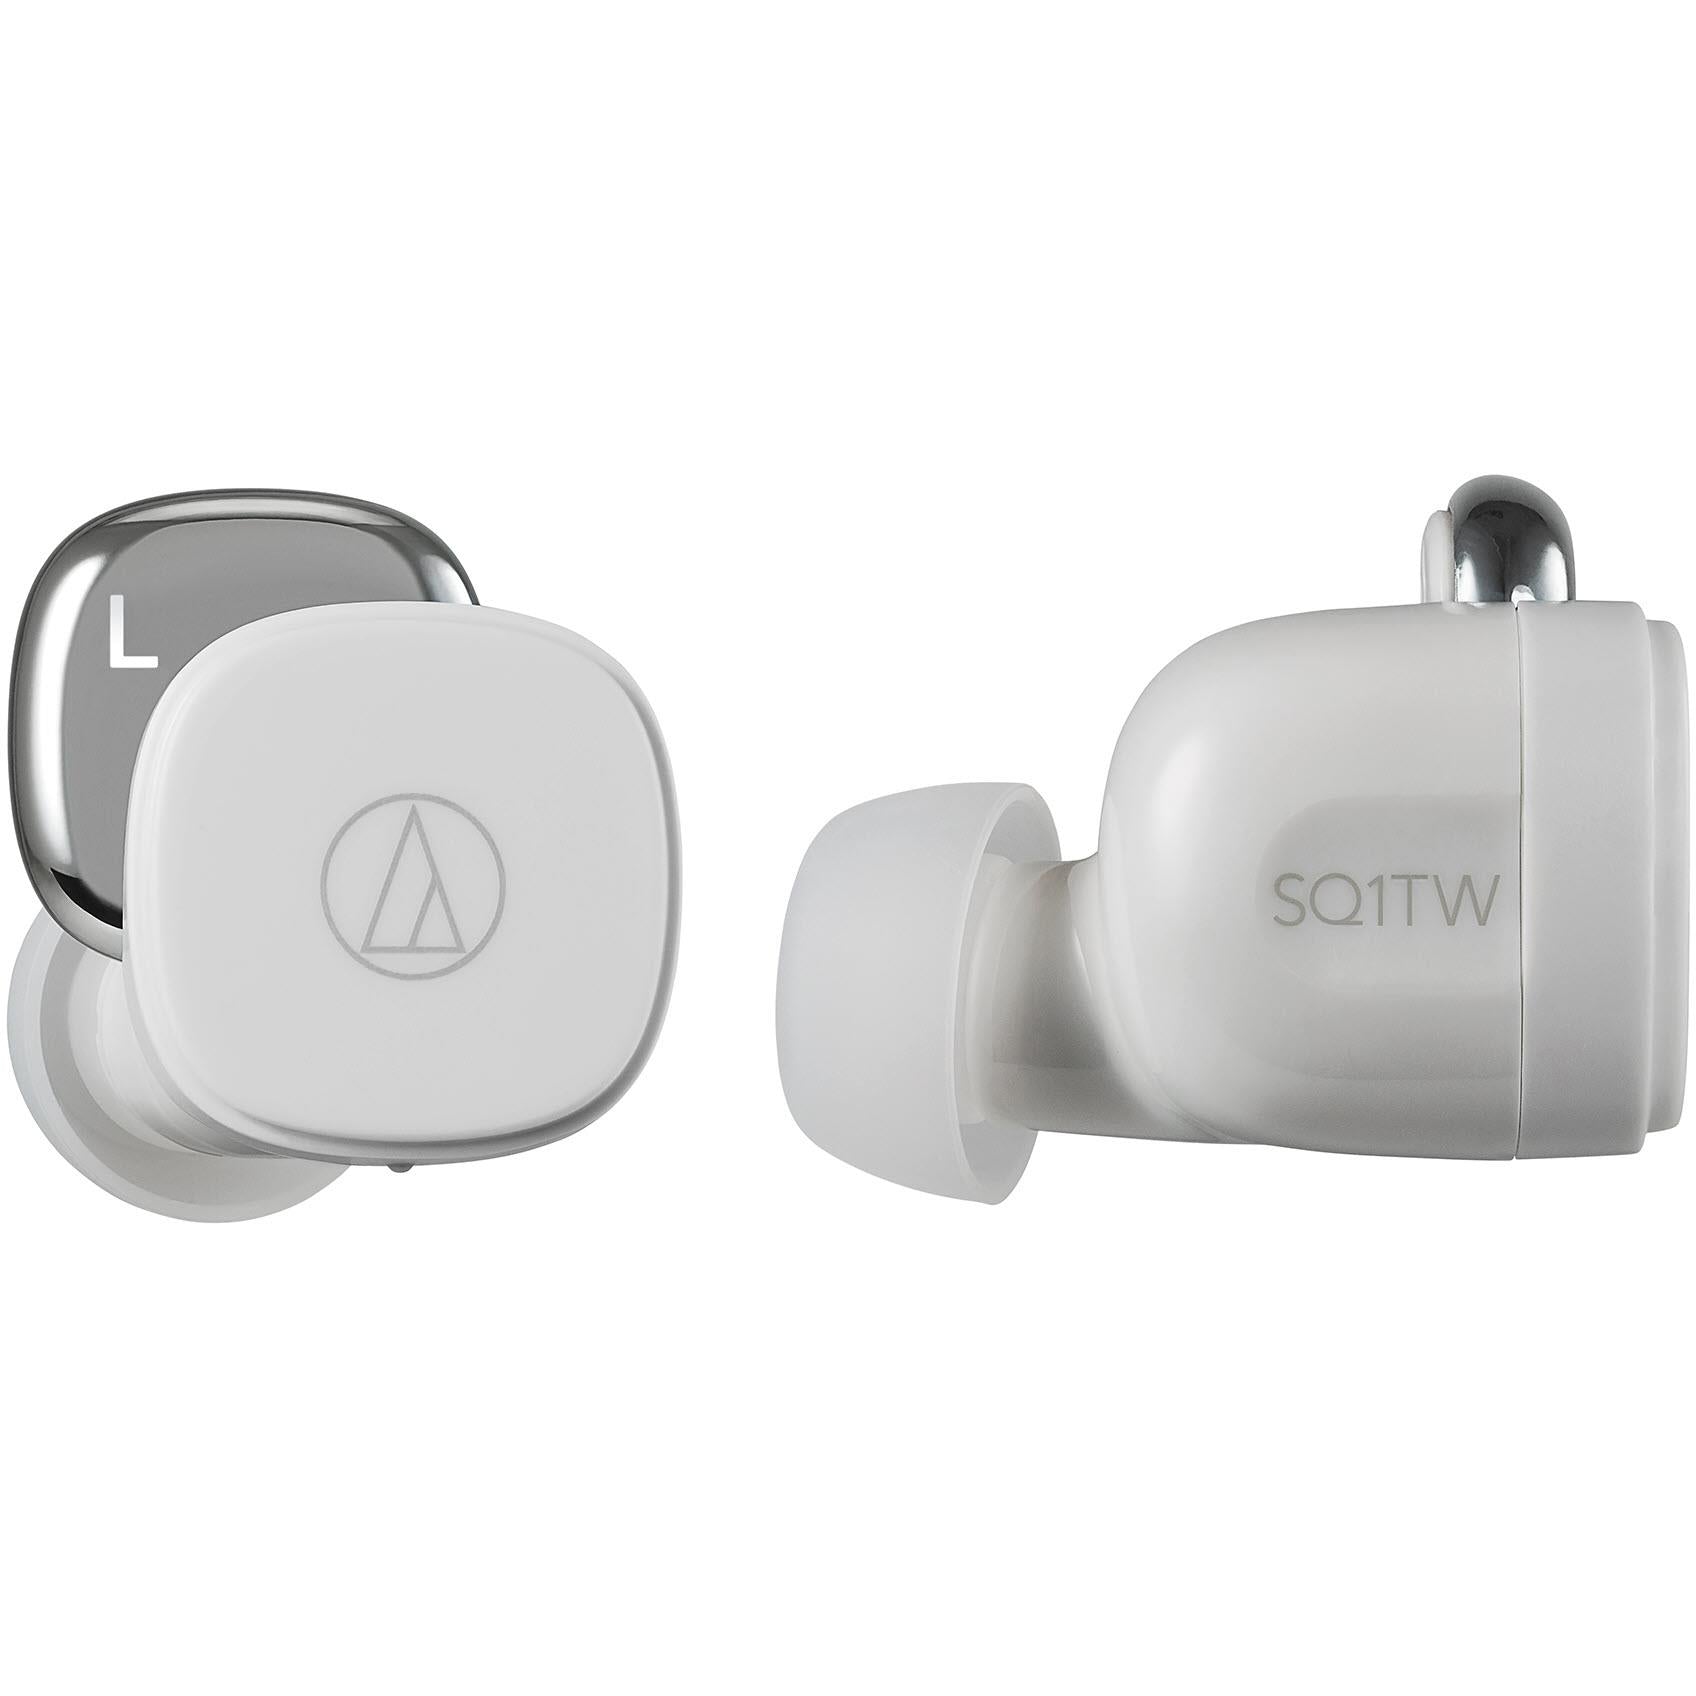 audio technica ath-sq1tw truly wireless in-ear headphones